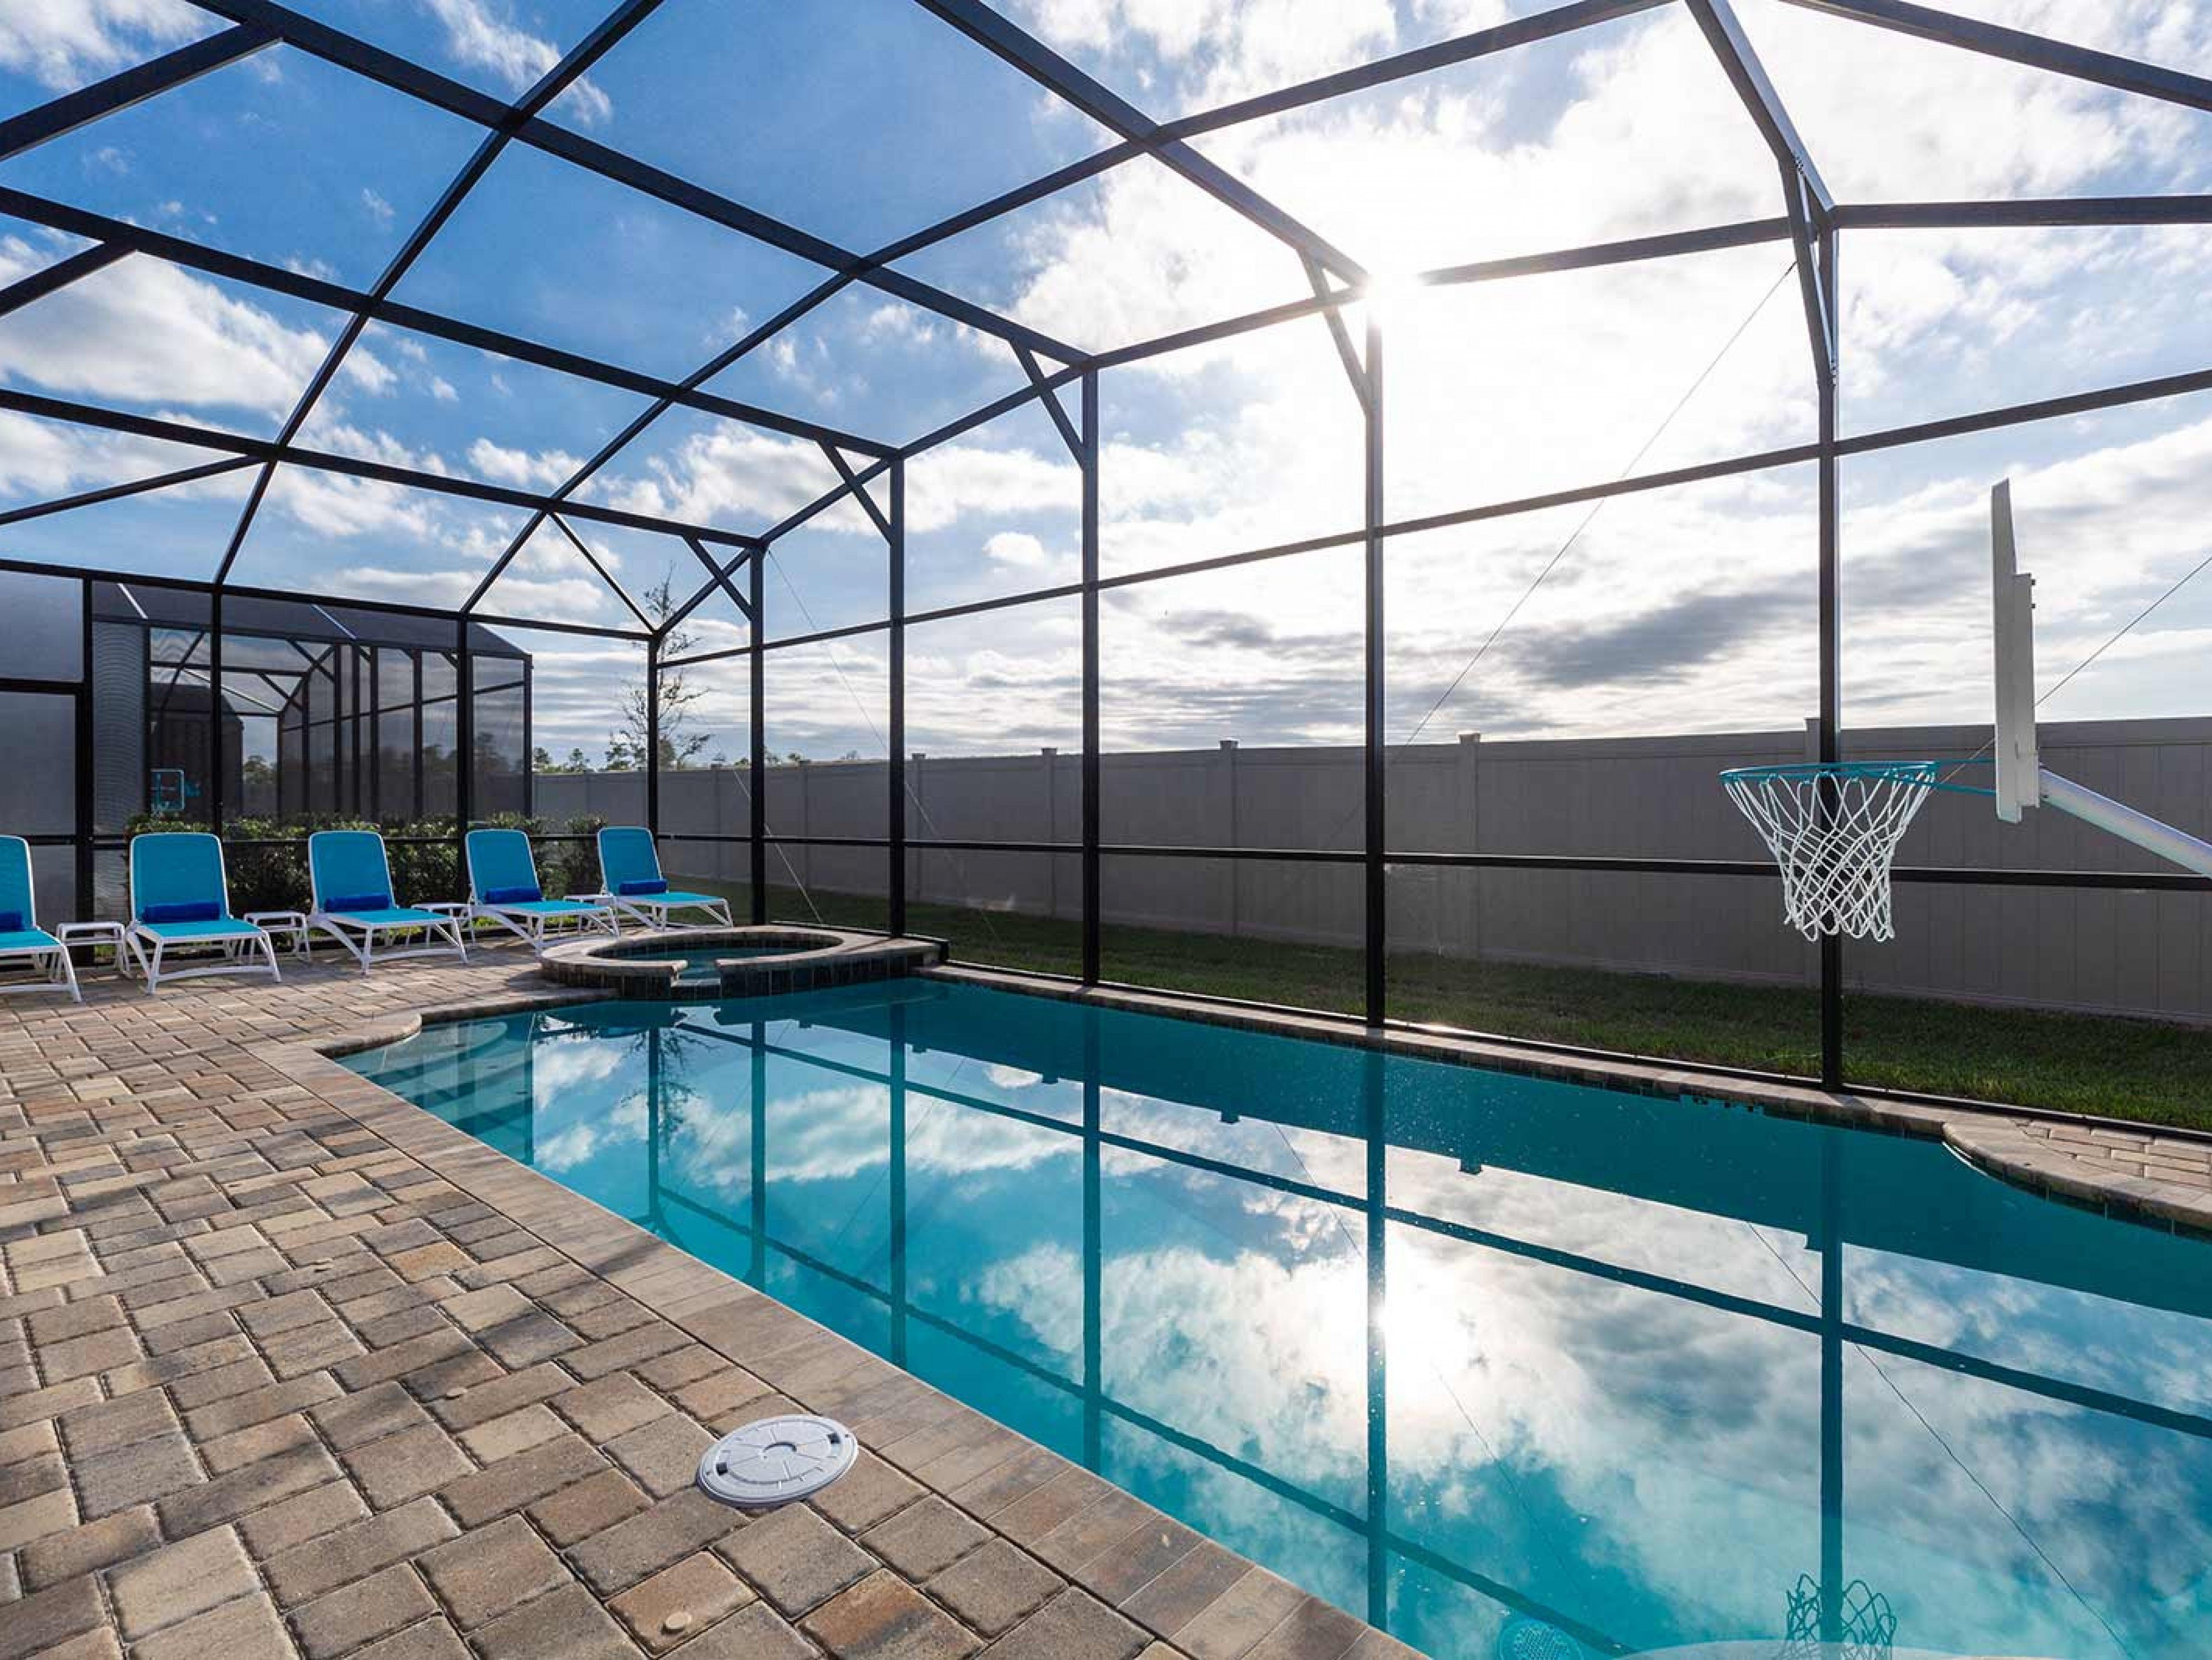 Solara Resort 216 rental near Legoland with pool